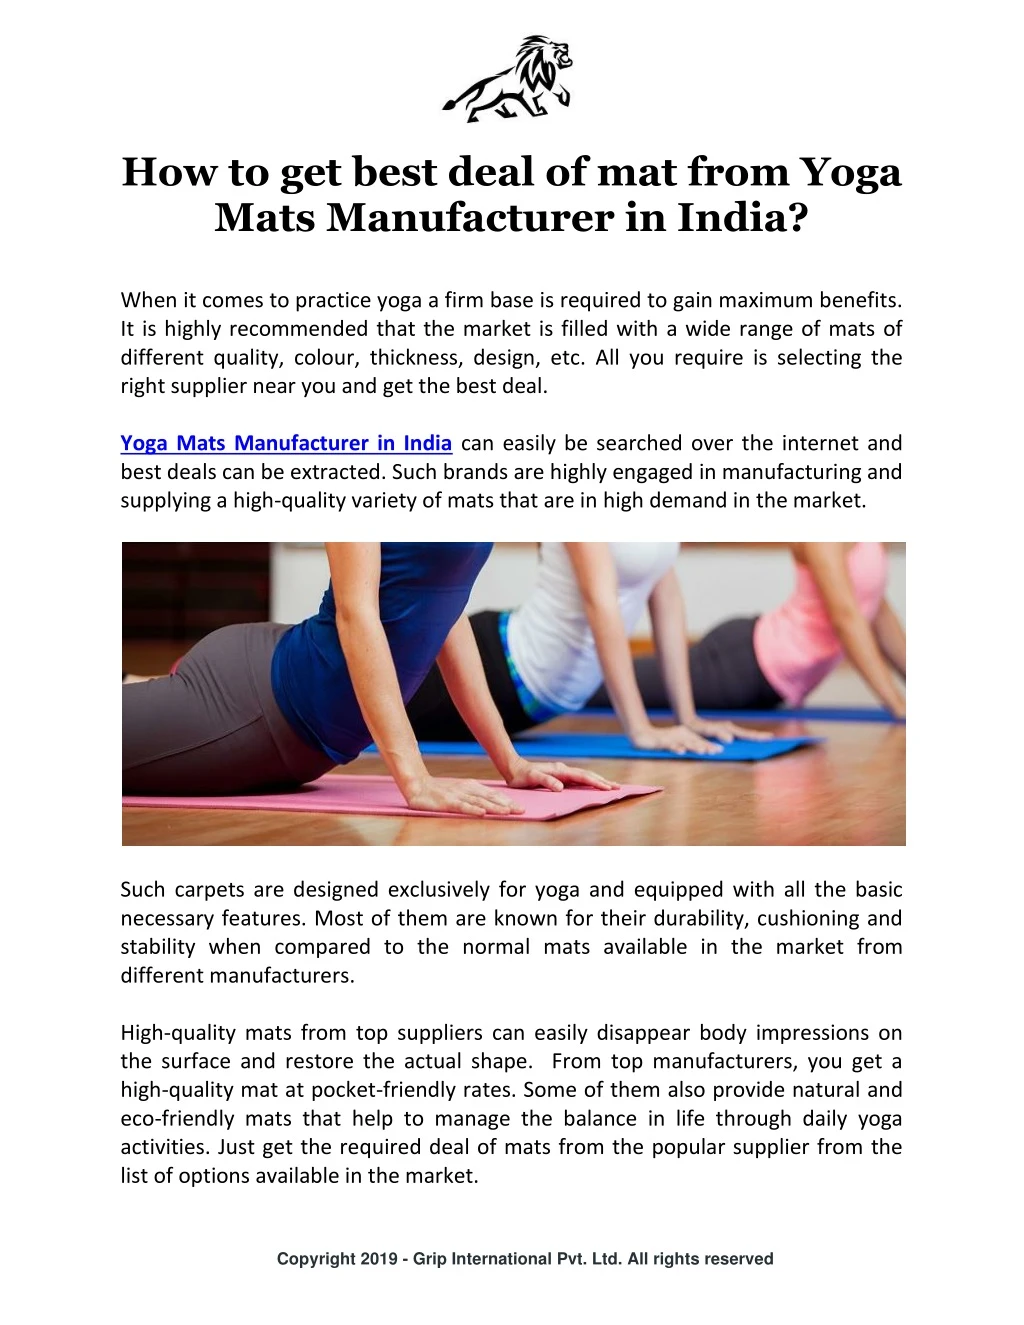 how to get best deal of mat from yoga mats